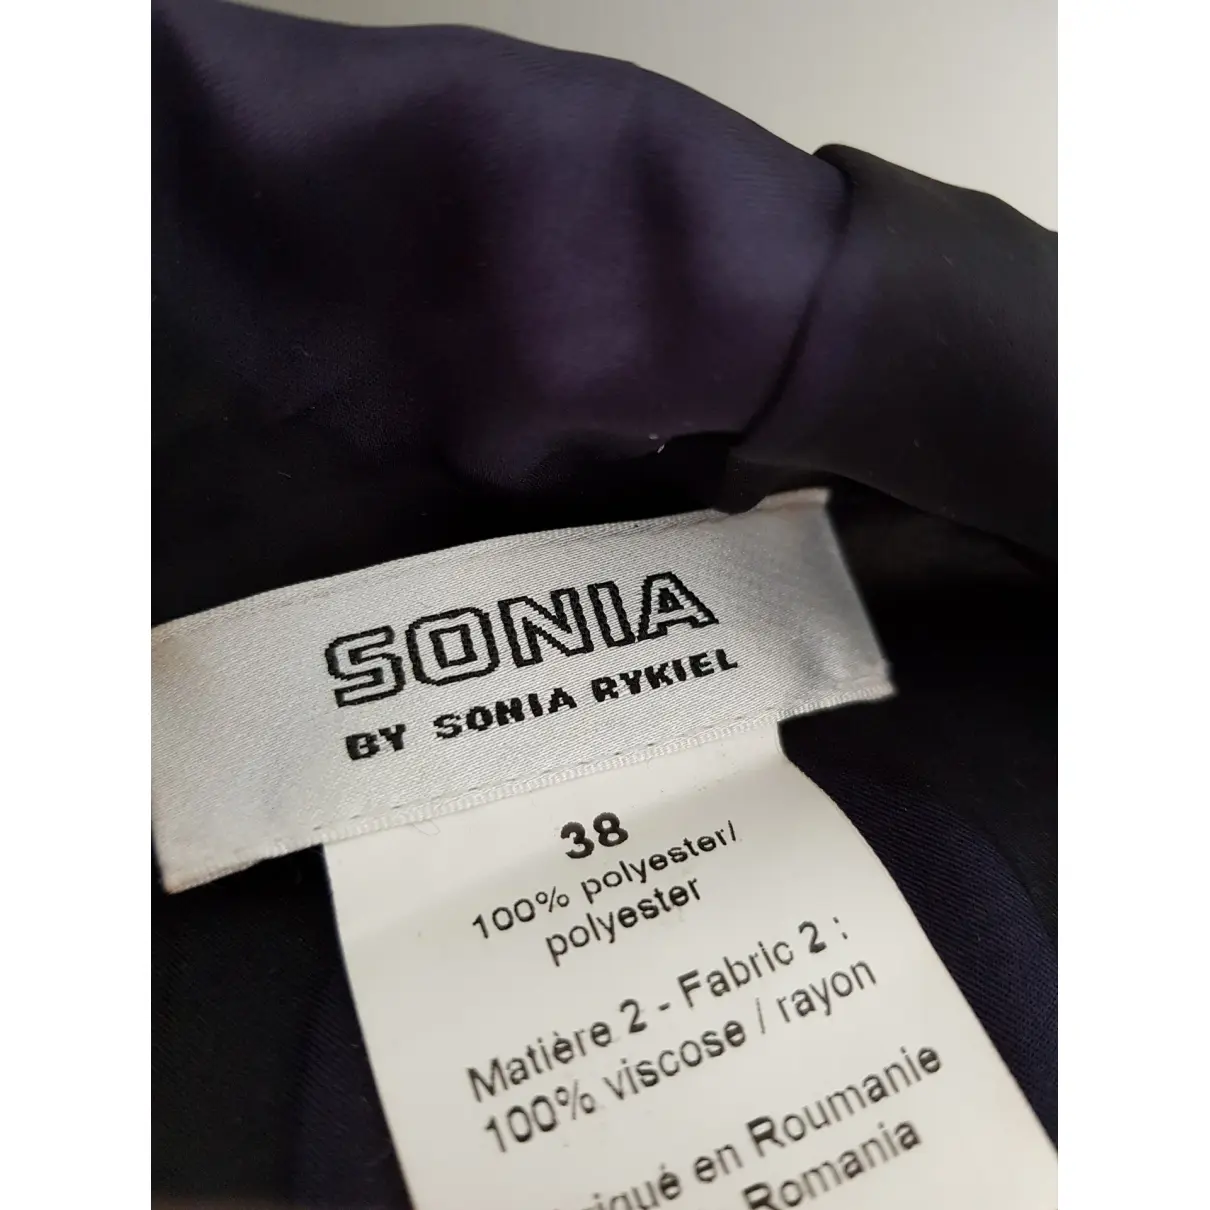 Buy Sonia by Sonia Rykiel Mid-length dress online